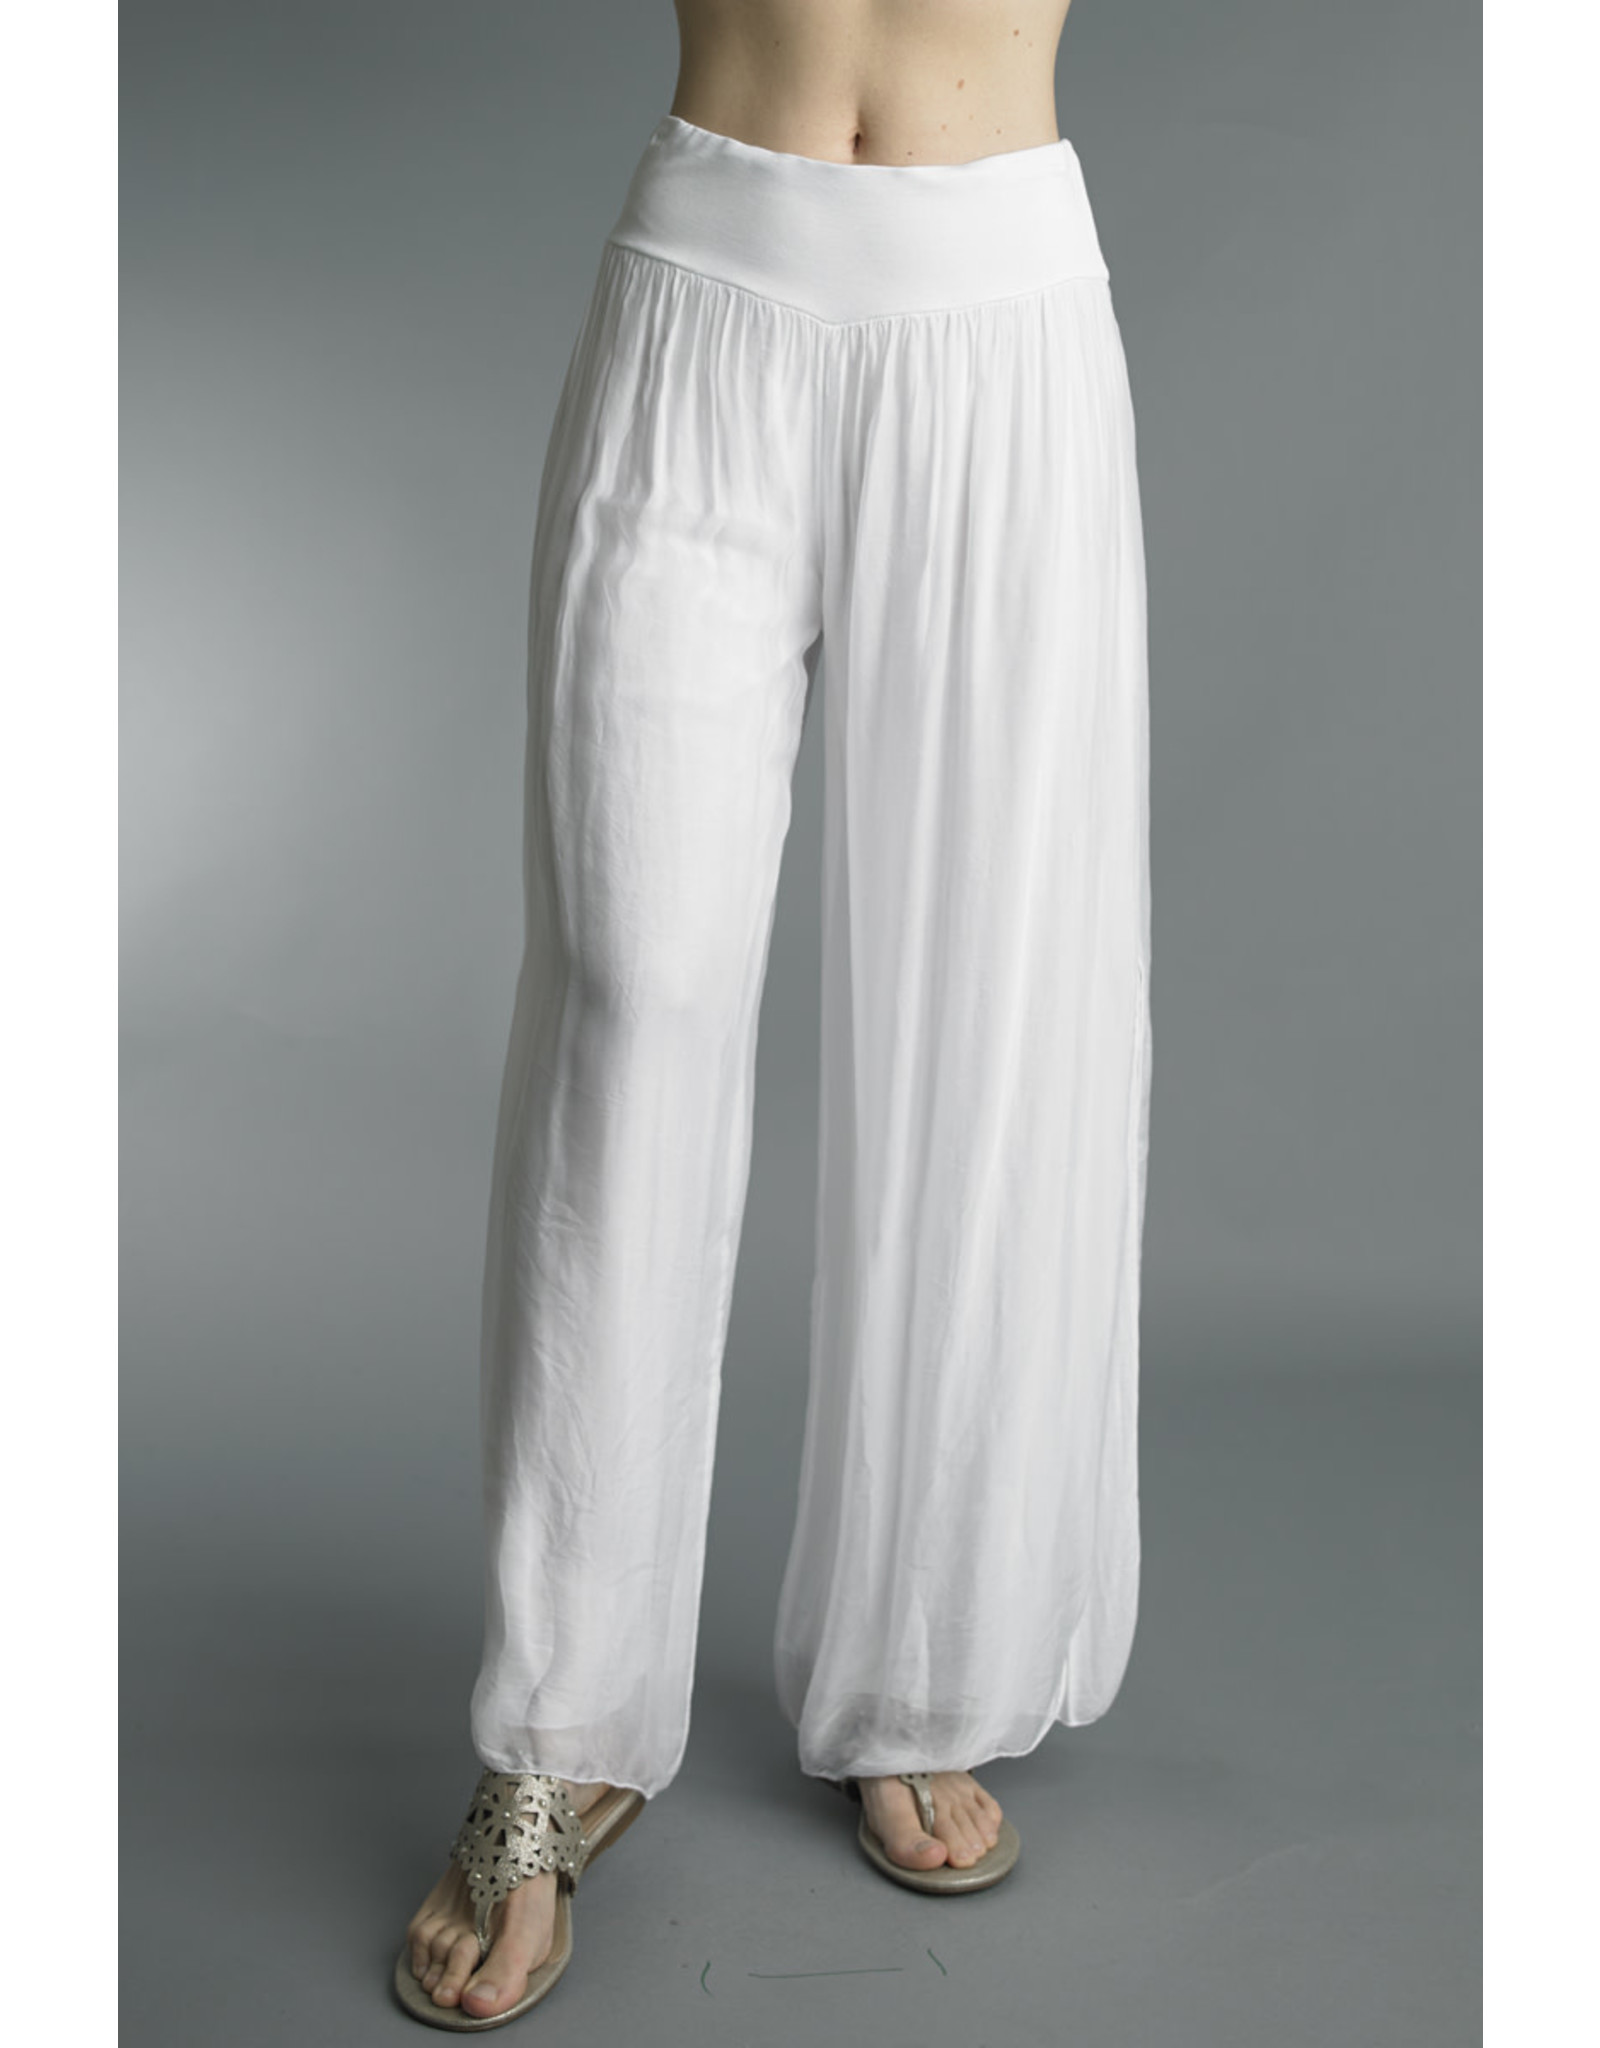 White Slit Silk Lined Pants